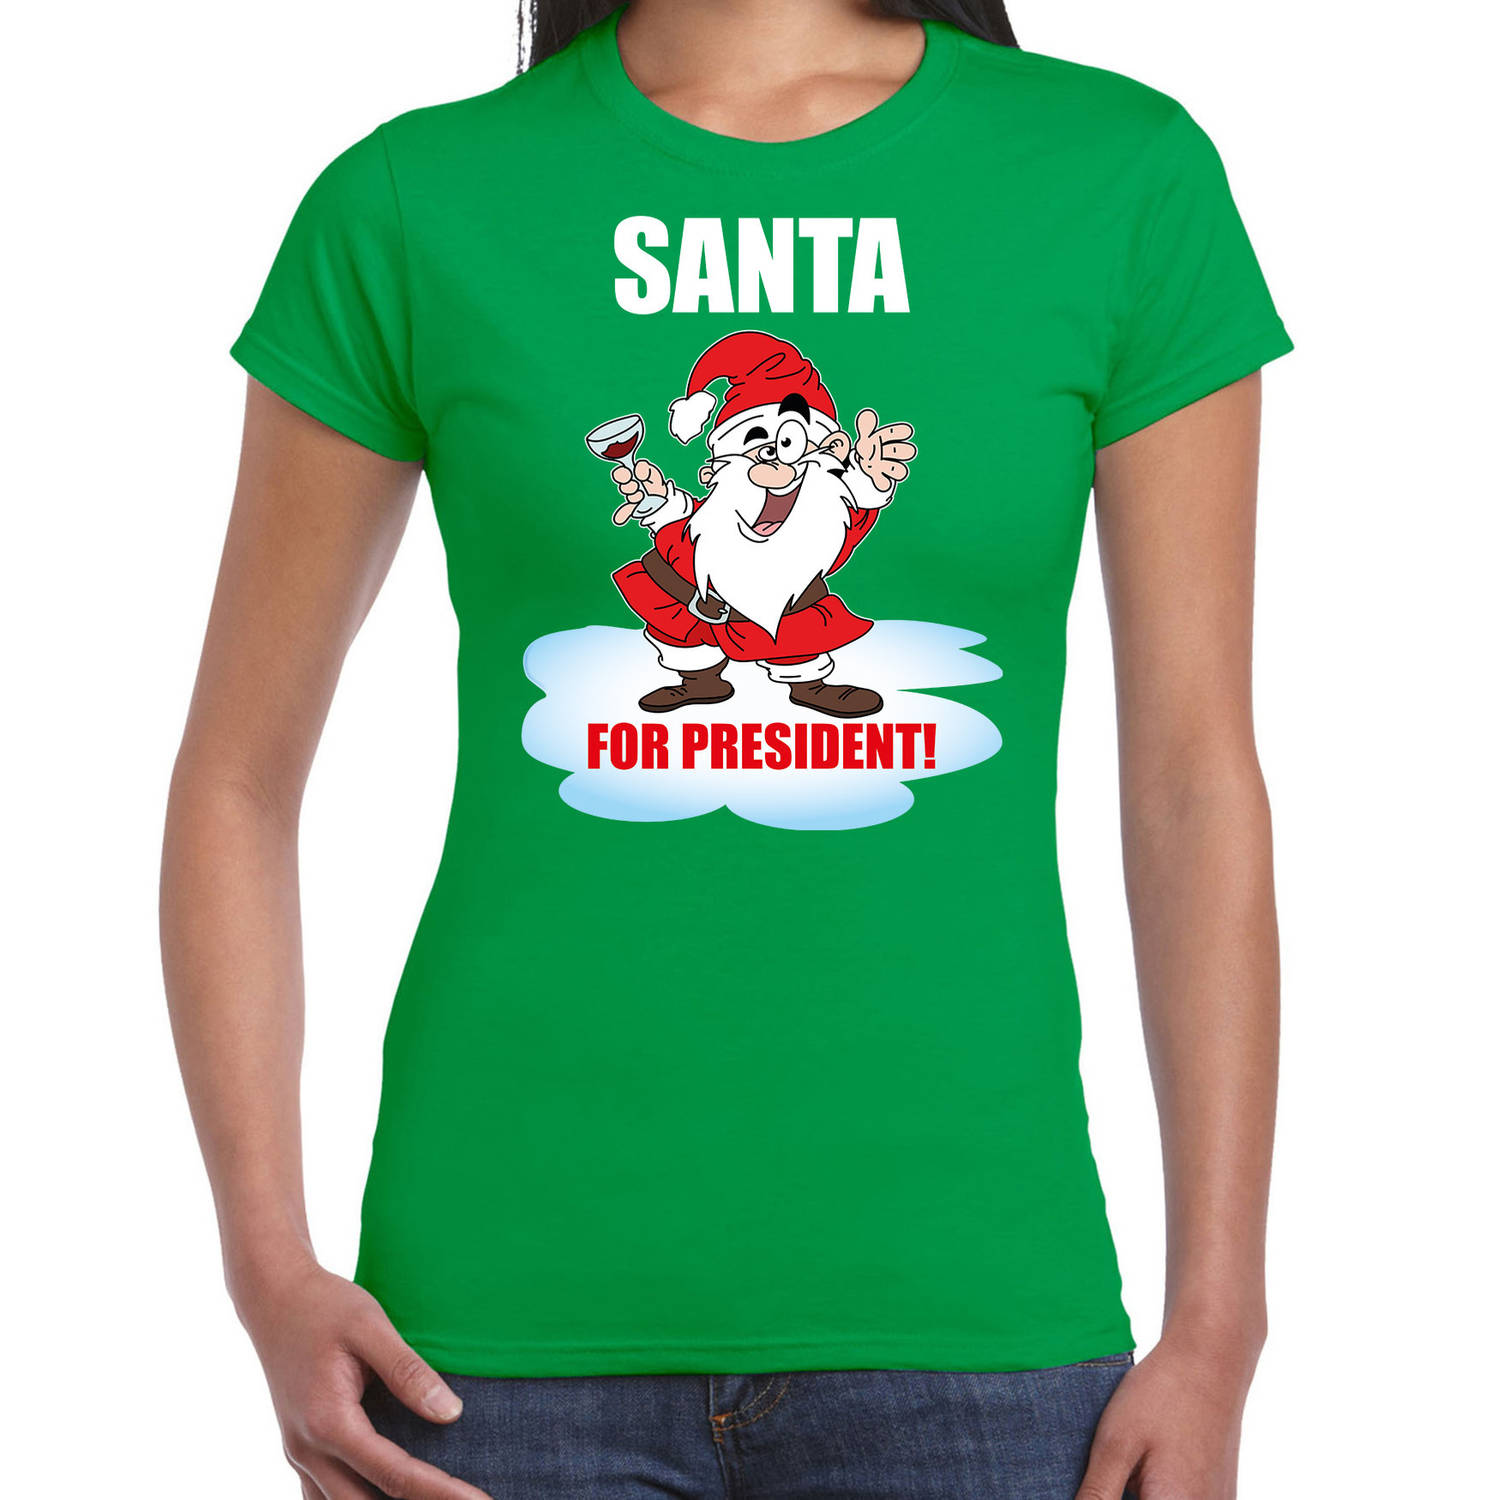 Groen Kerstshirt / Kerstkleding Santa for president voor dames L - kerst t-shirts